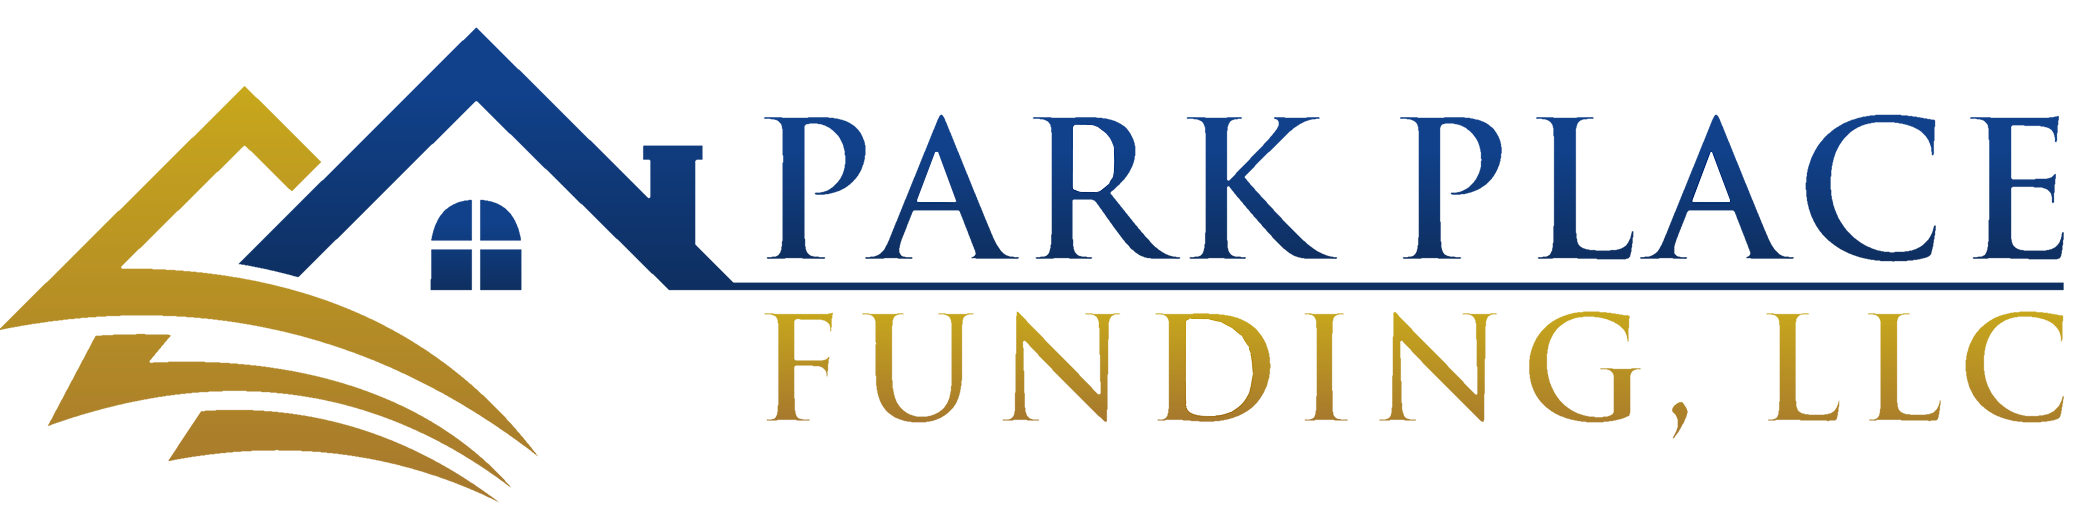 Park Place Funding, LLC